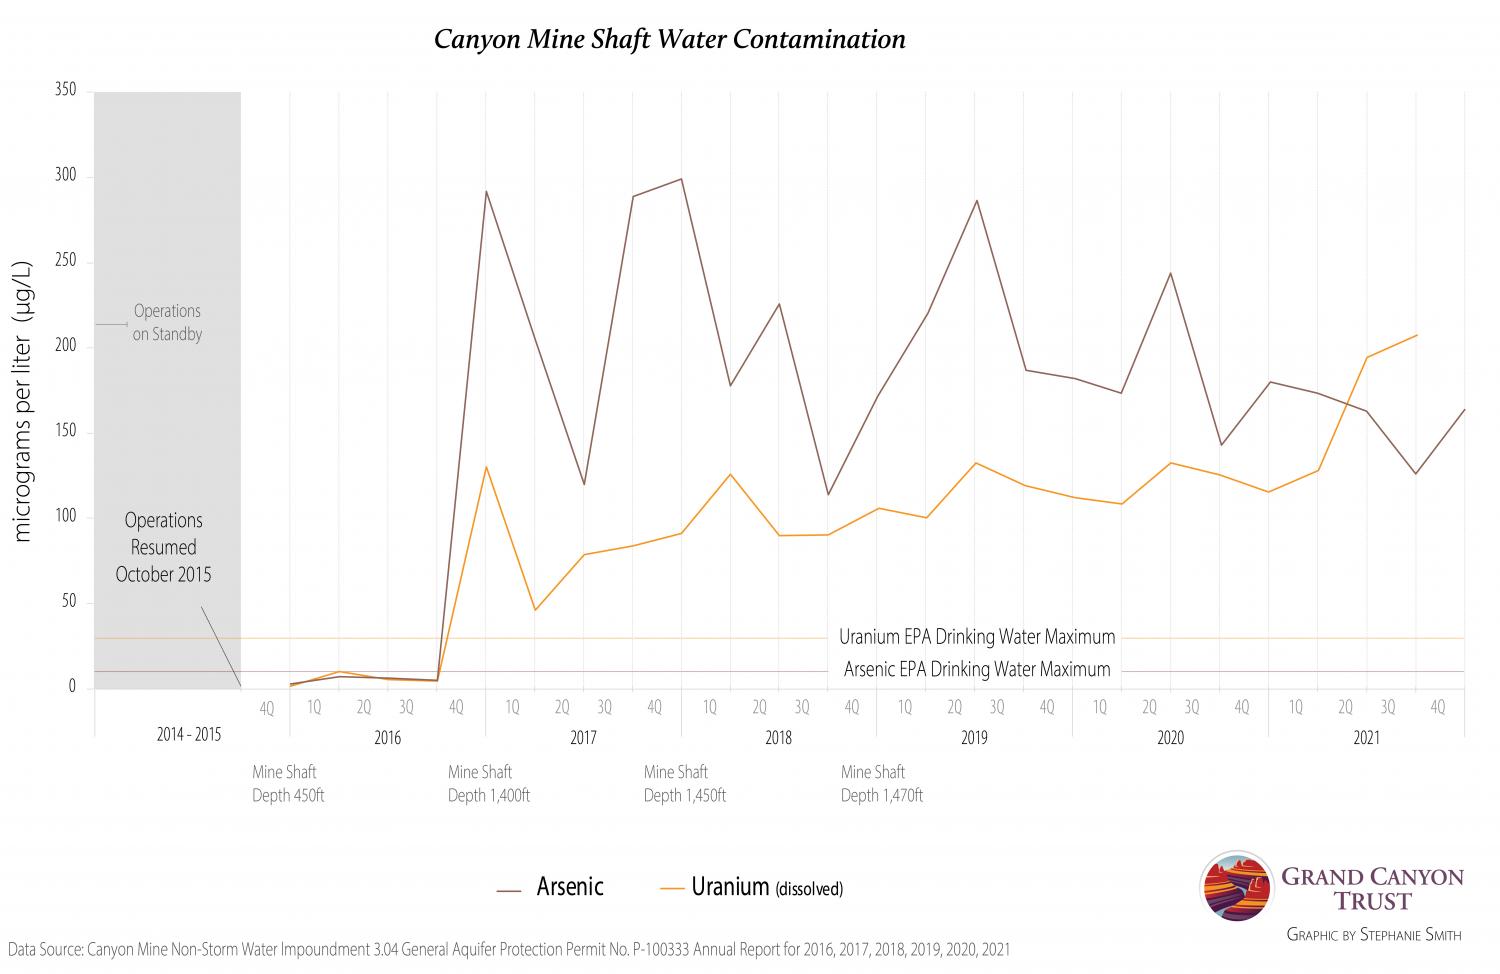 Canyon Mine uranium and arsenic contamination graph, 2015-2019..